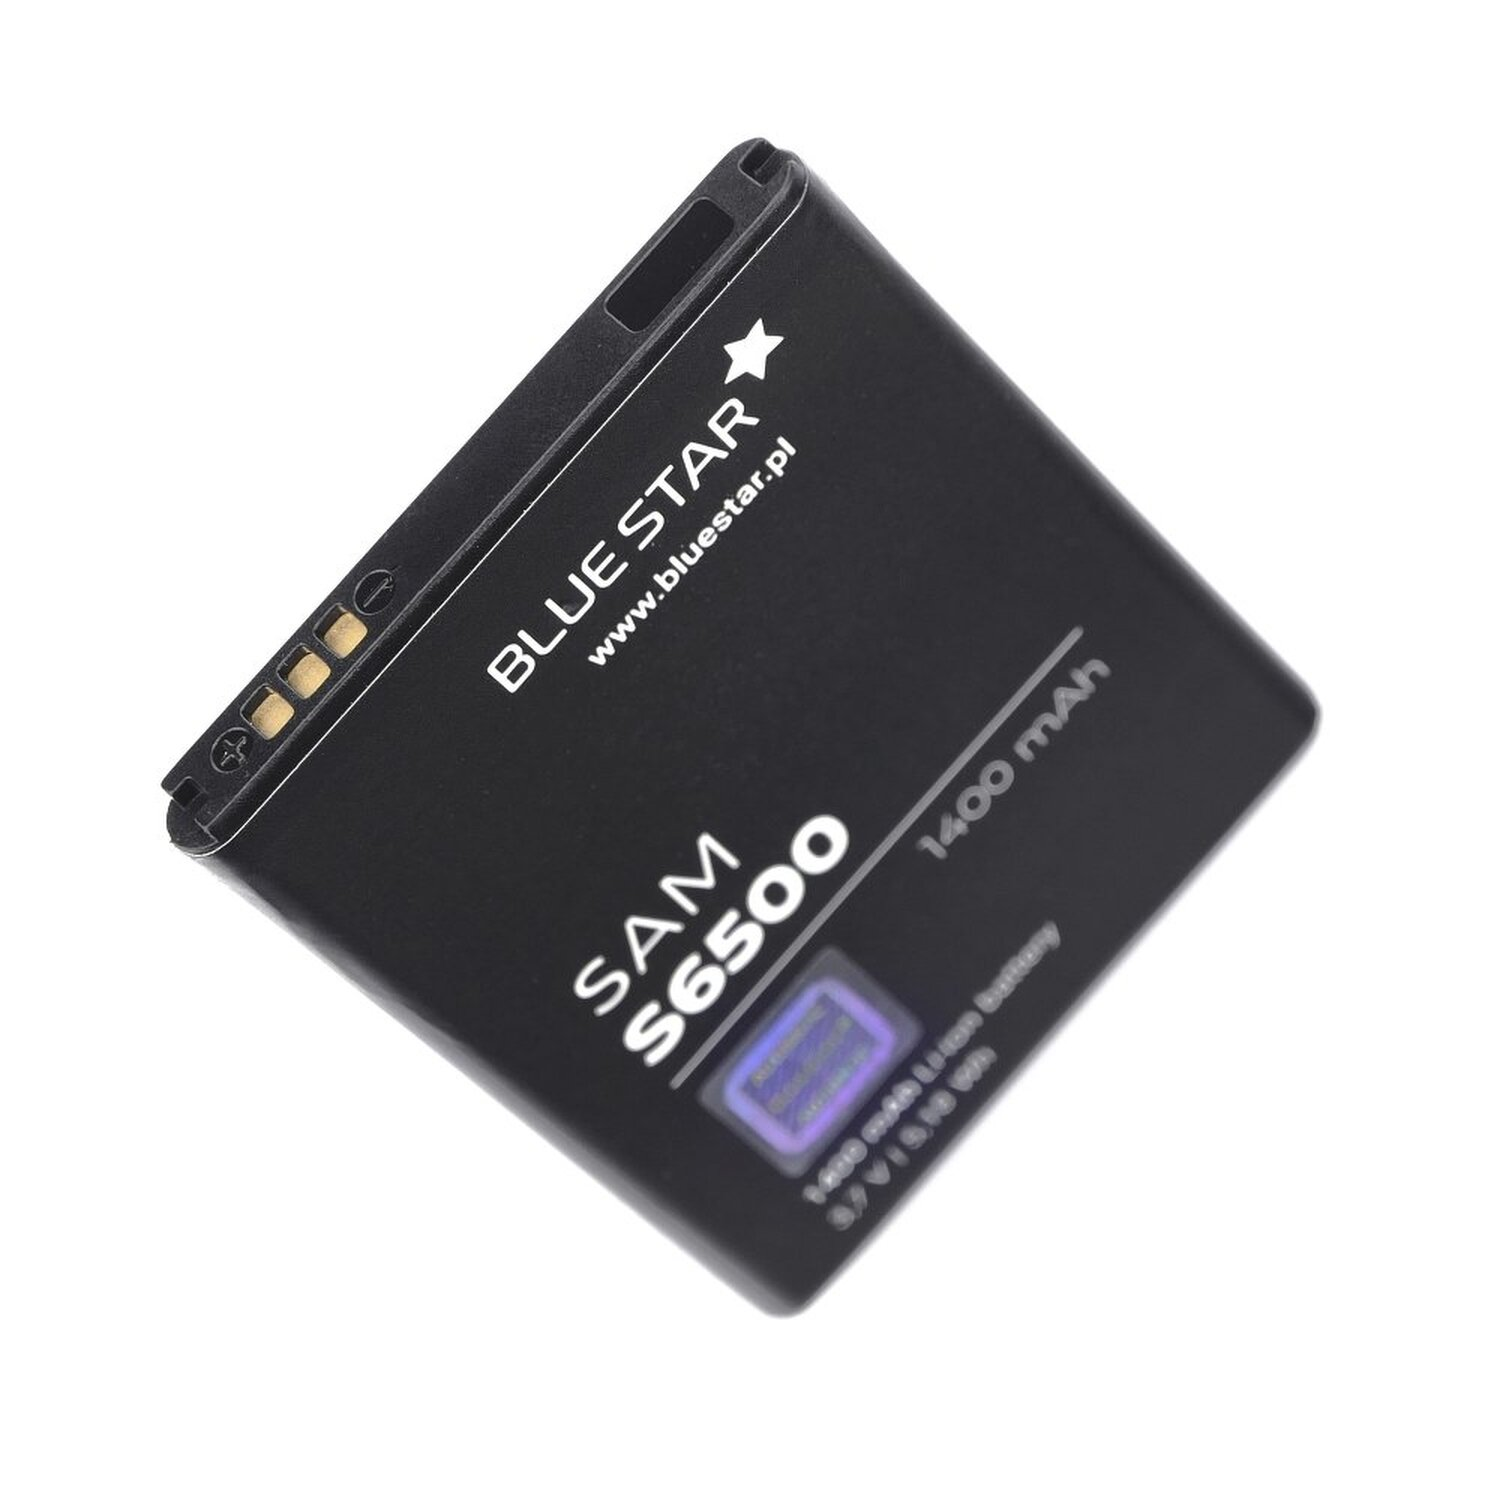 BLUESTAR Akku für Galaxy Li-Ion Samsung Handyakku 2 Mini